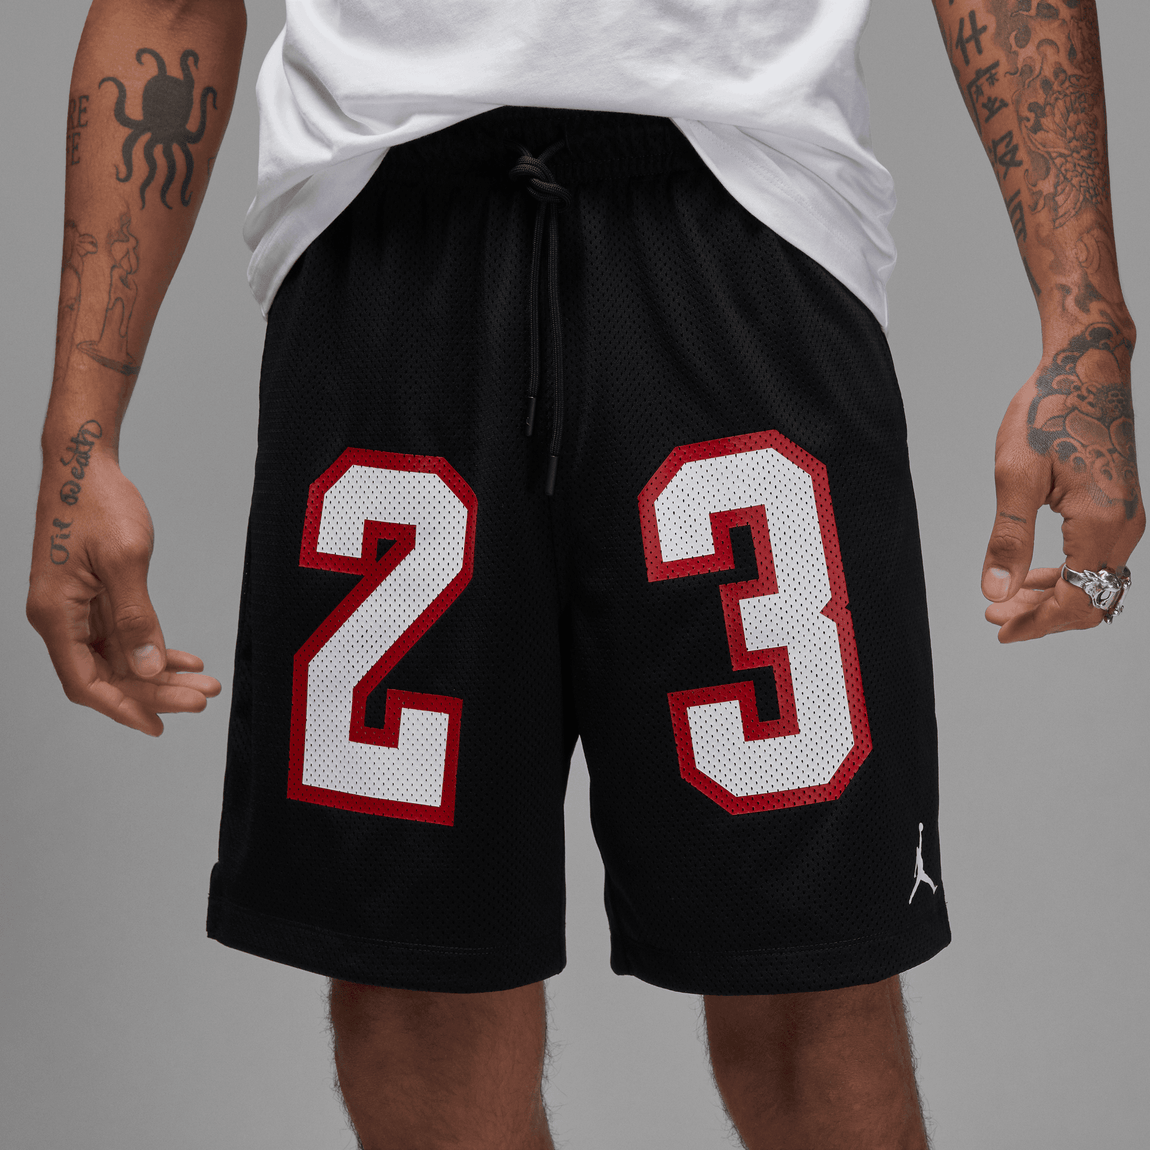 Jordan Essentials Shorts (Black/White-Red) - Jordan Essentials Shorts (Black/White-Red) - 